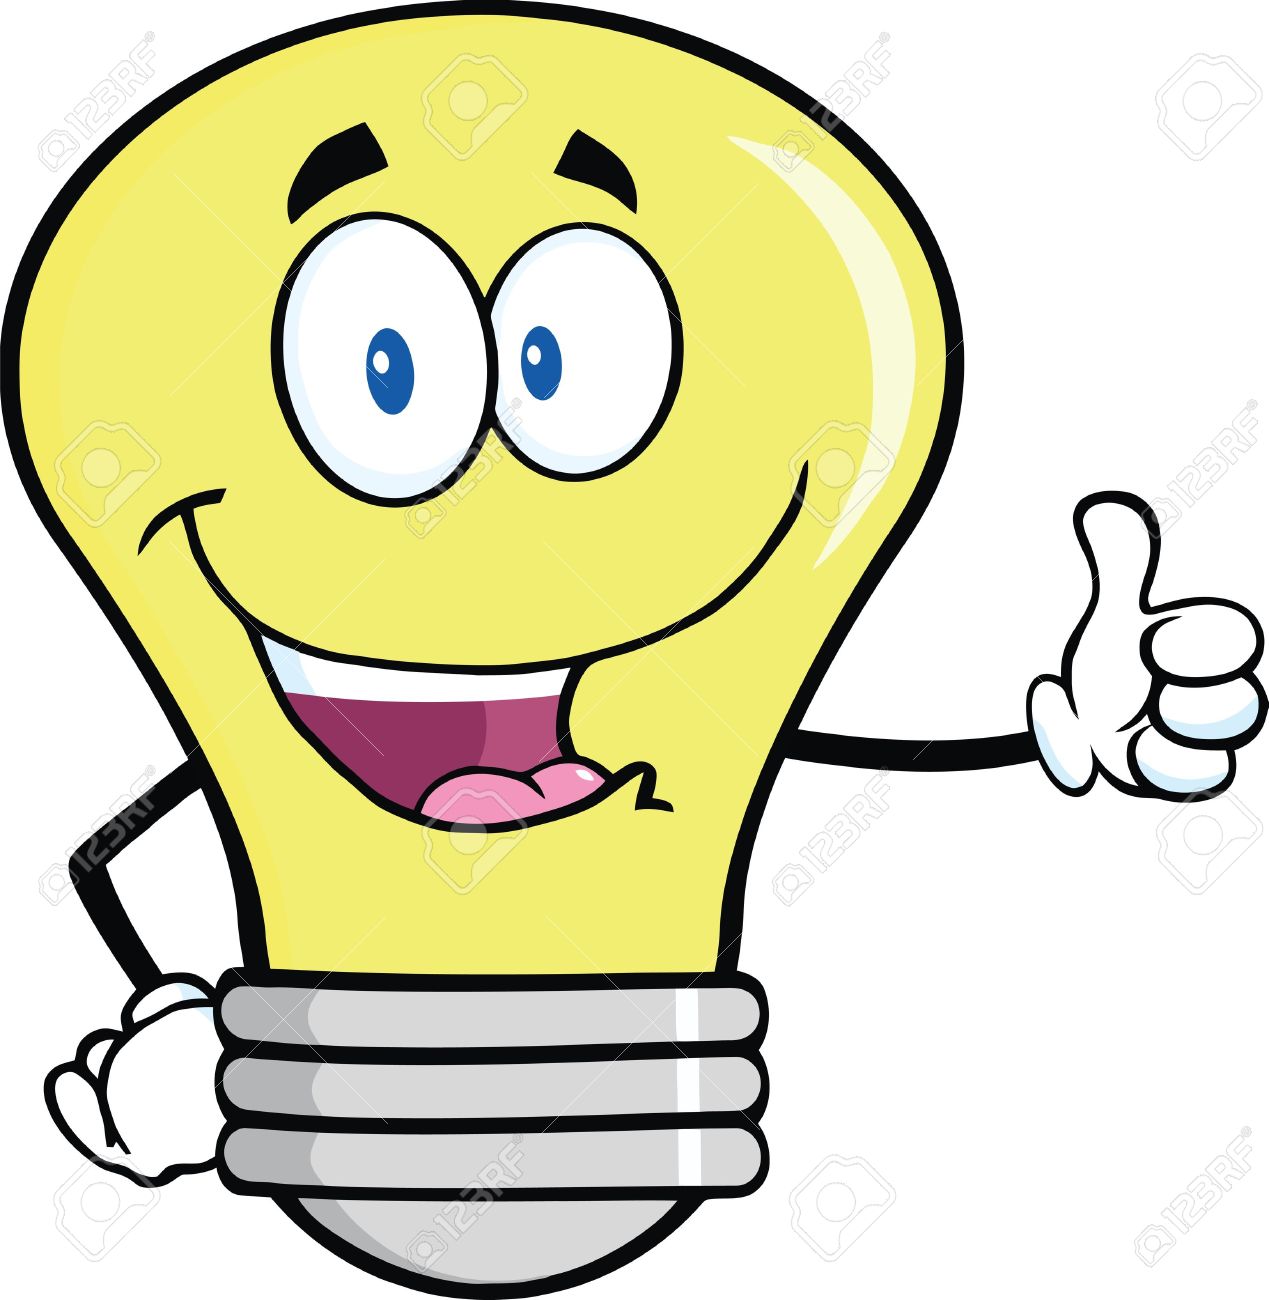 21311788-Light-Bulb-Cartoon-Mascot-Character-Giving-A-Thumb-Up-Stock-Vector.jpg